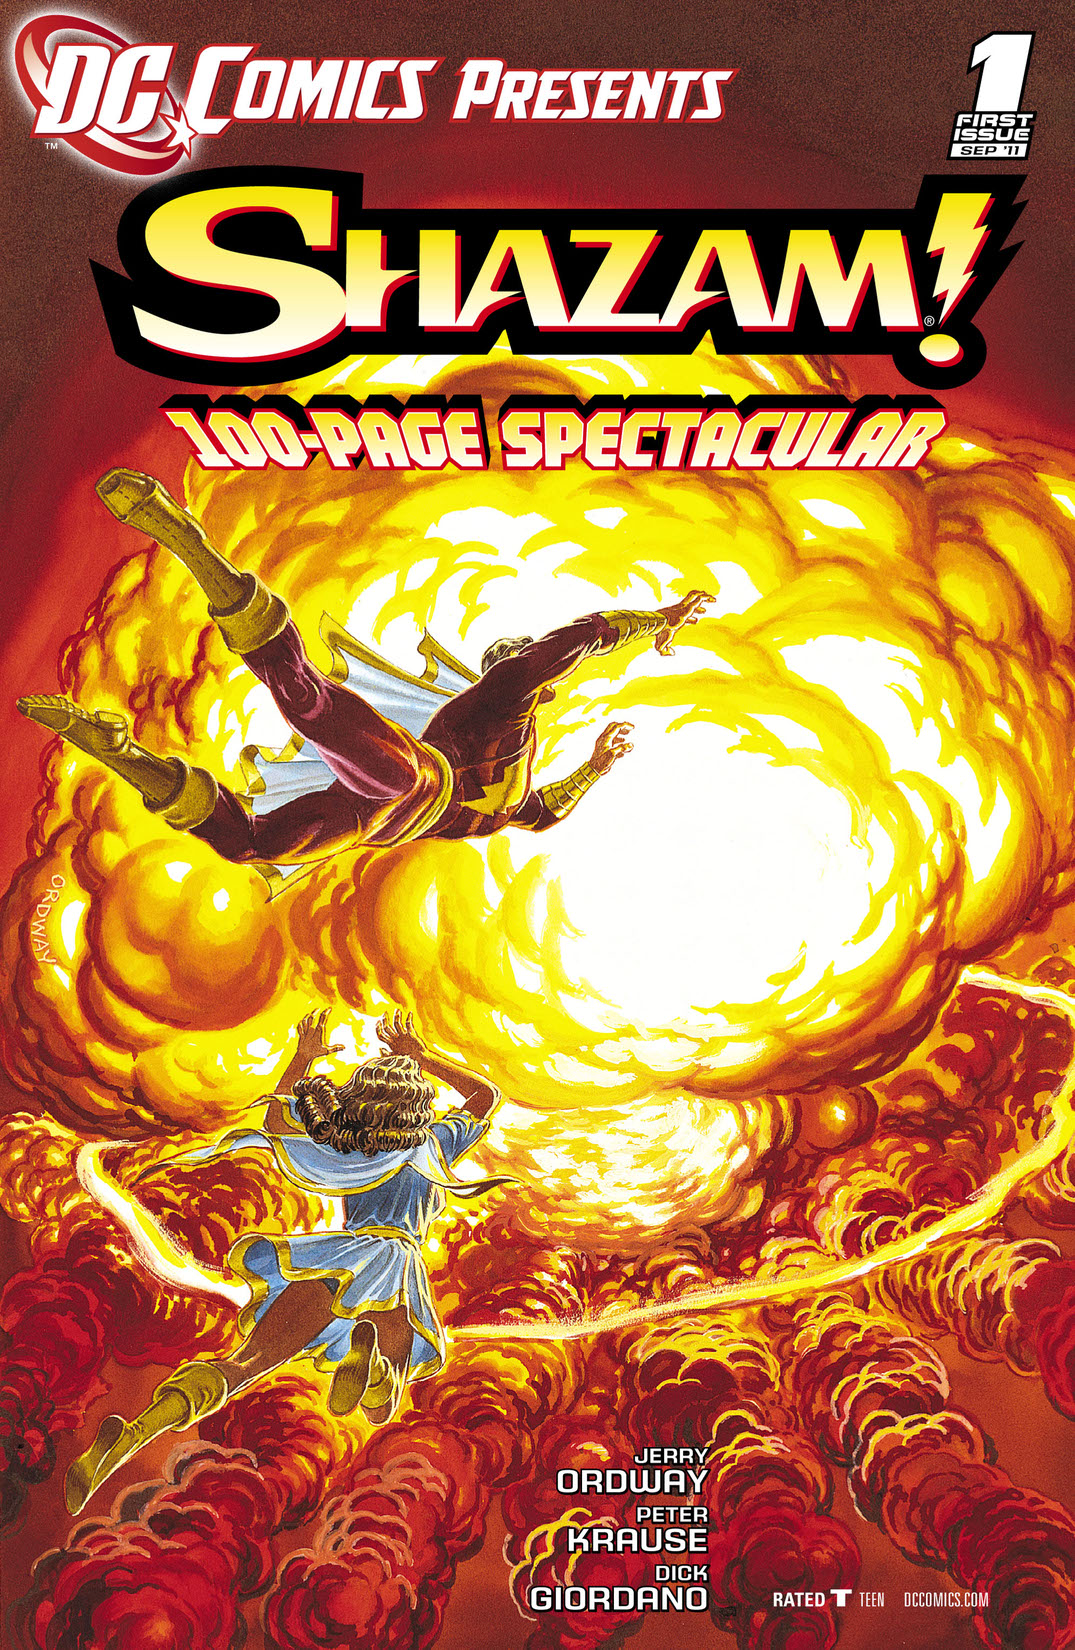 DC Comics Presents: SHAZAM! (2011-) #1 preview images